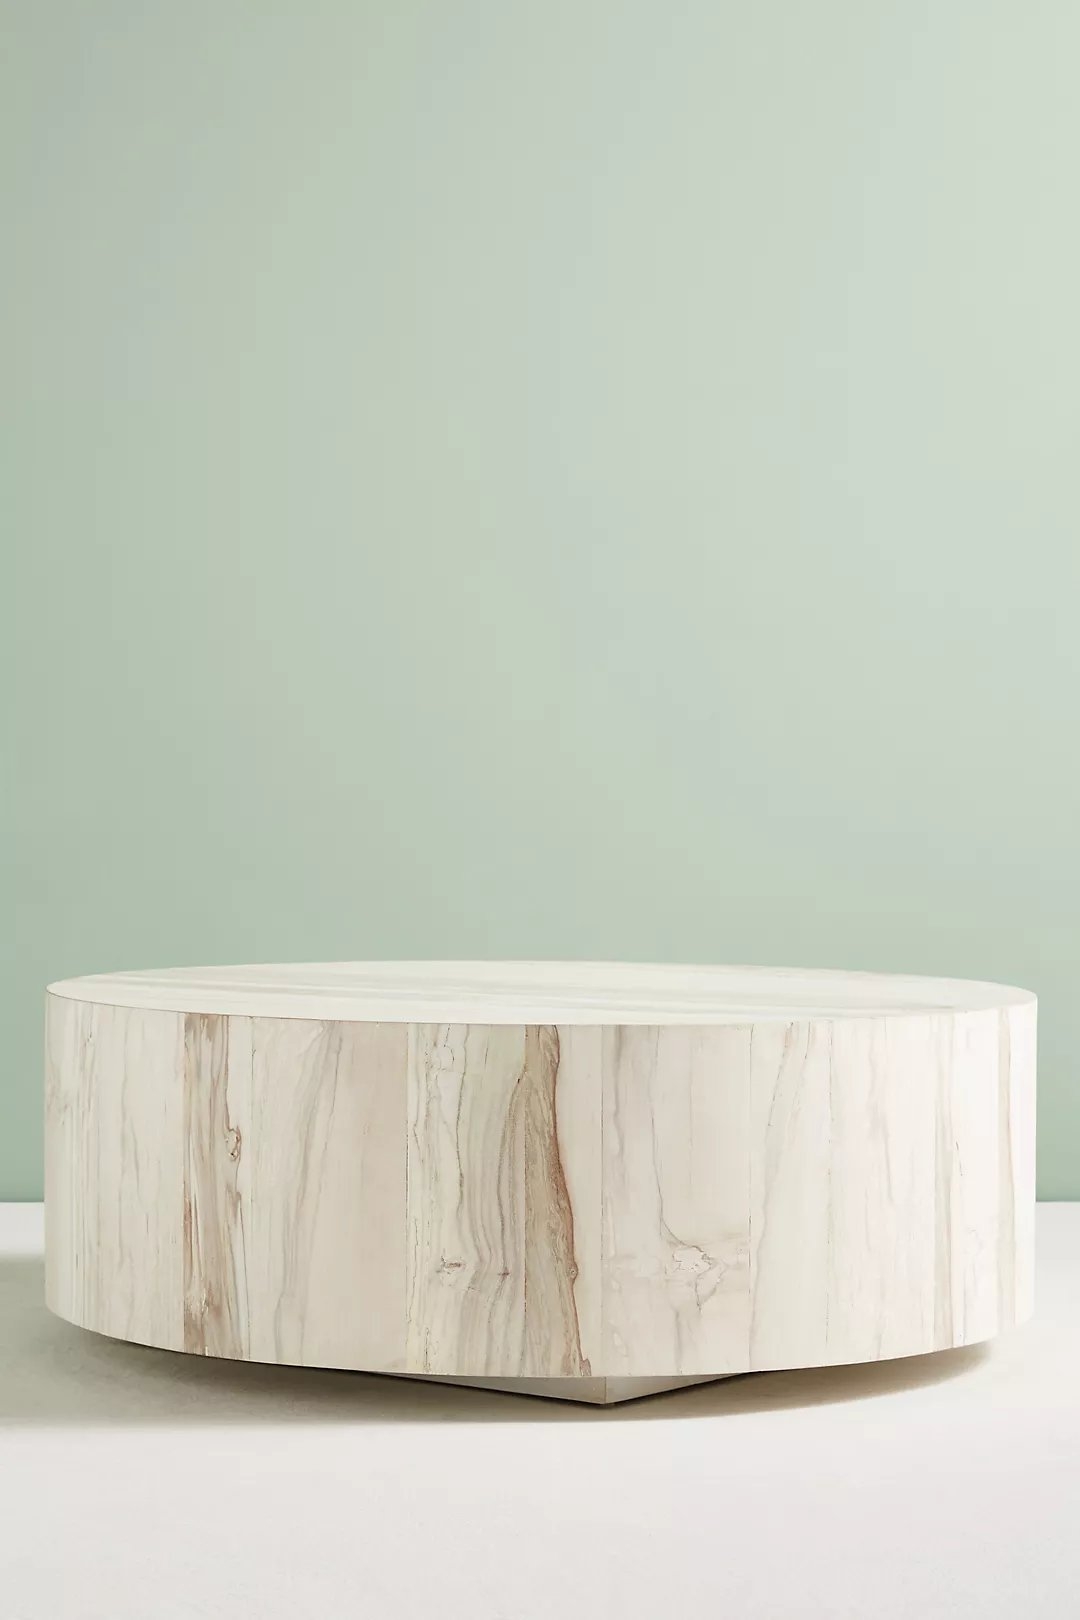 Swirled Drum Coffee Table - Large - Image 0